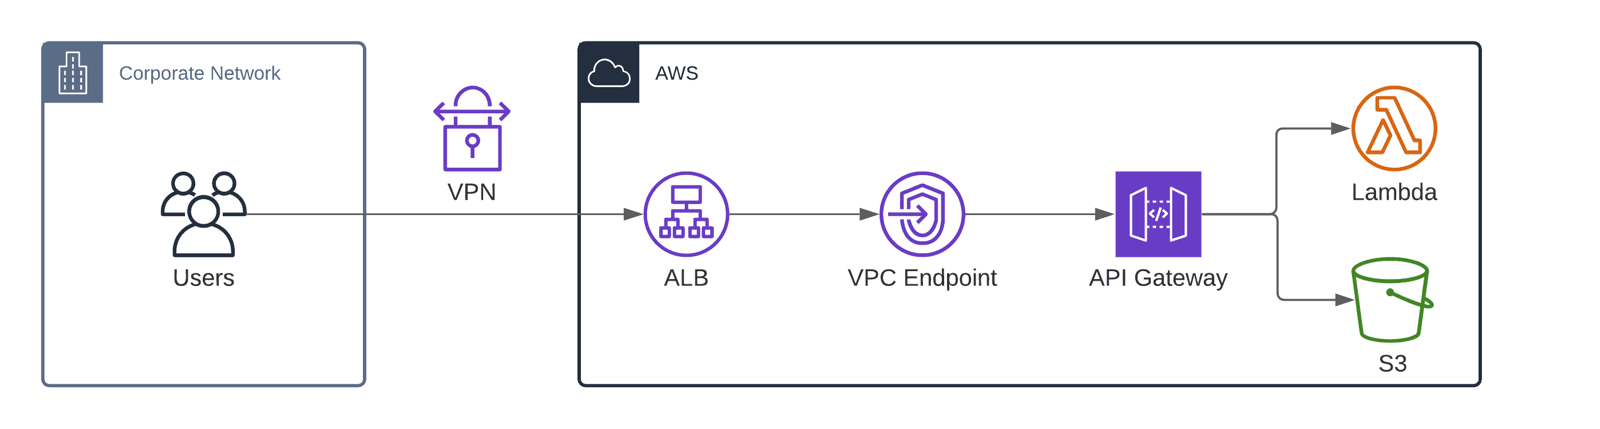 Serverless Hybdrid Cloud: VPN, ALB, VPC Endpoint, API Gateway, and Lambda